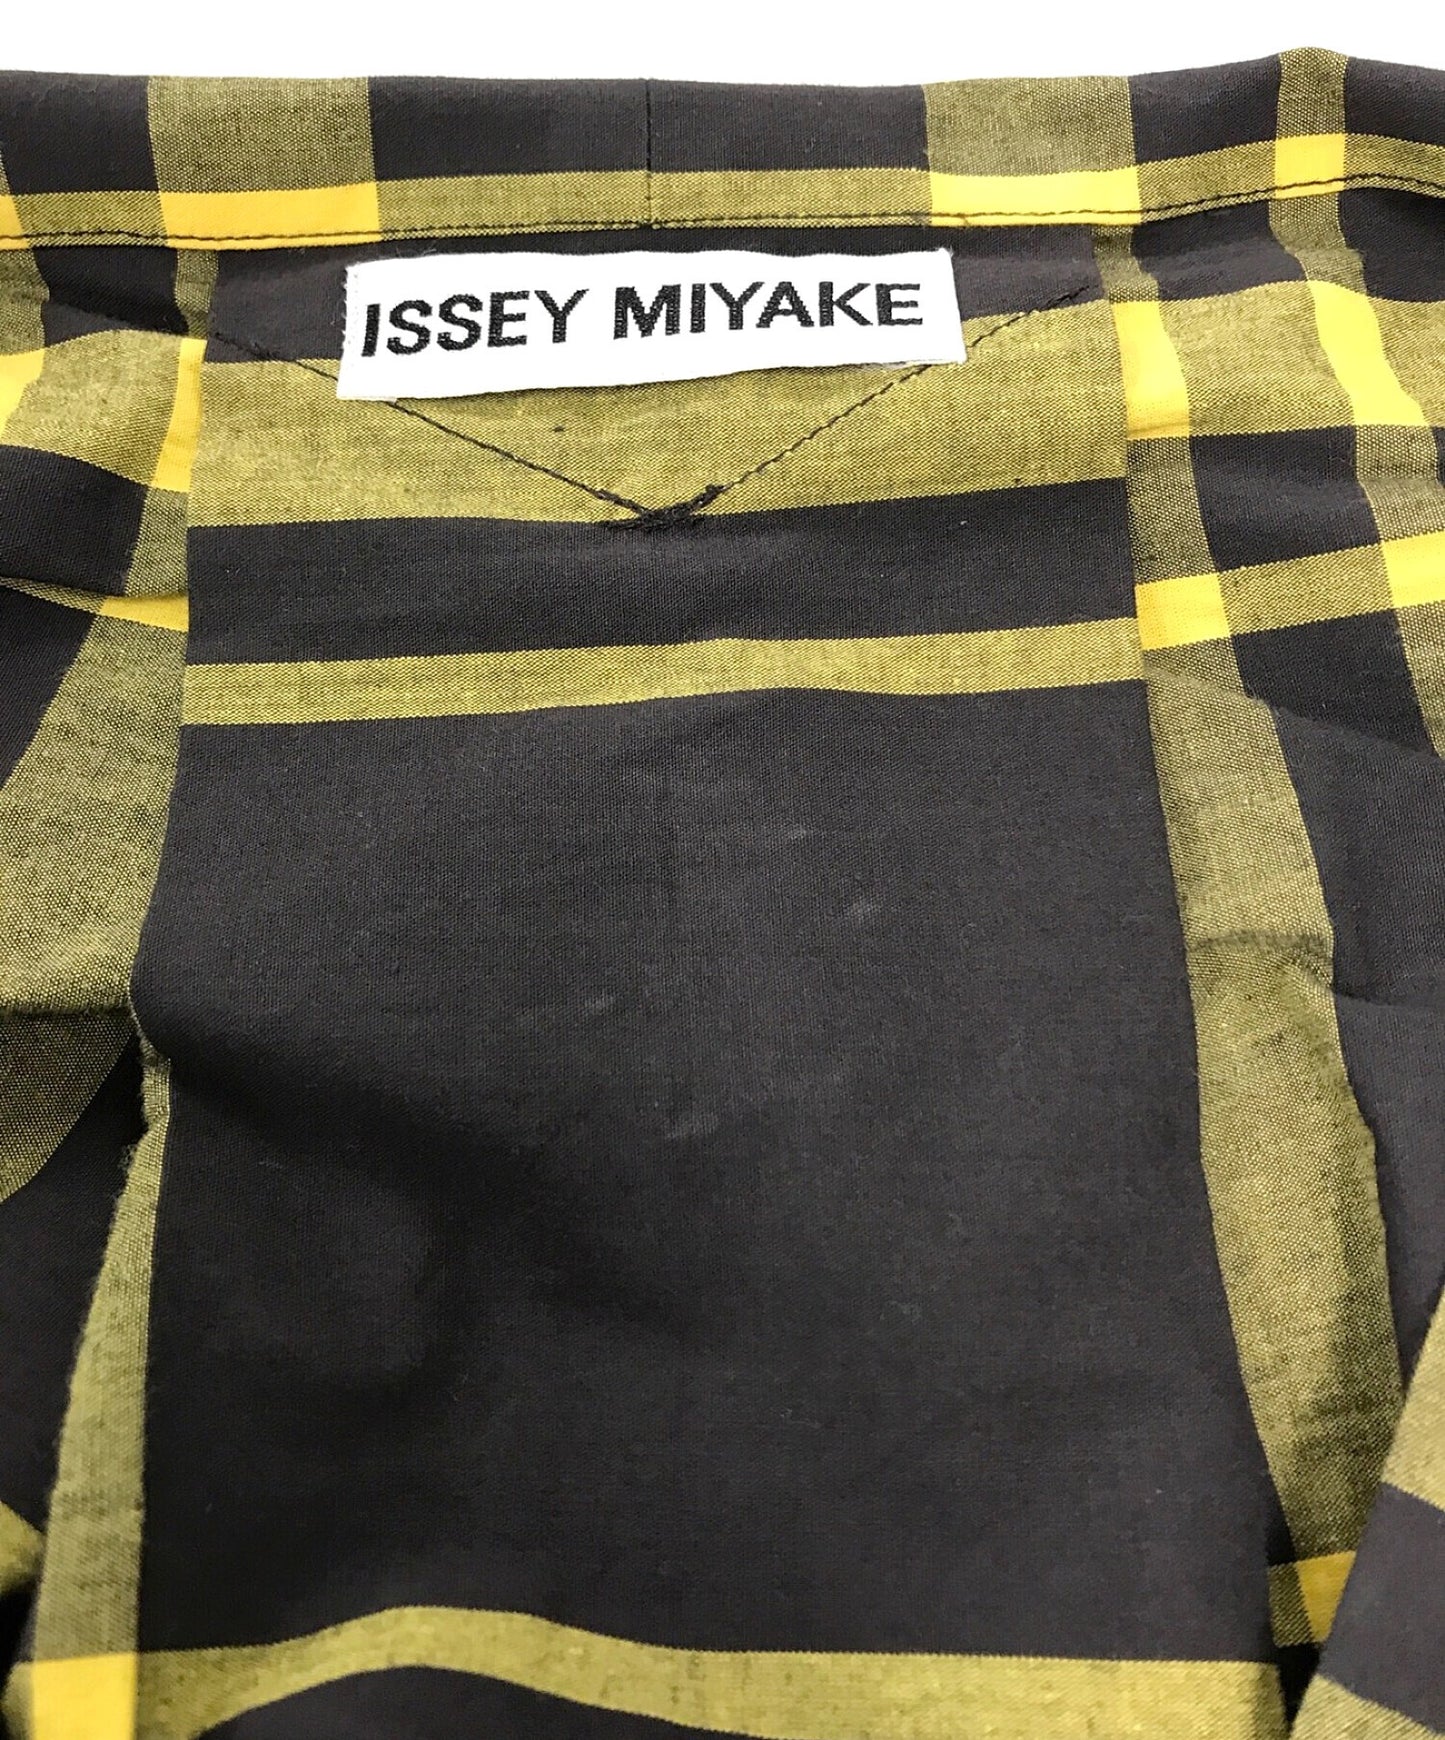 Issey Miyake 체크 셔츠 재킷 JG31200